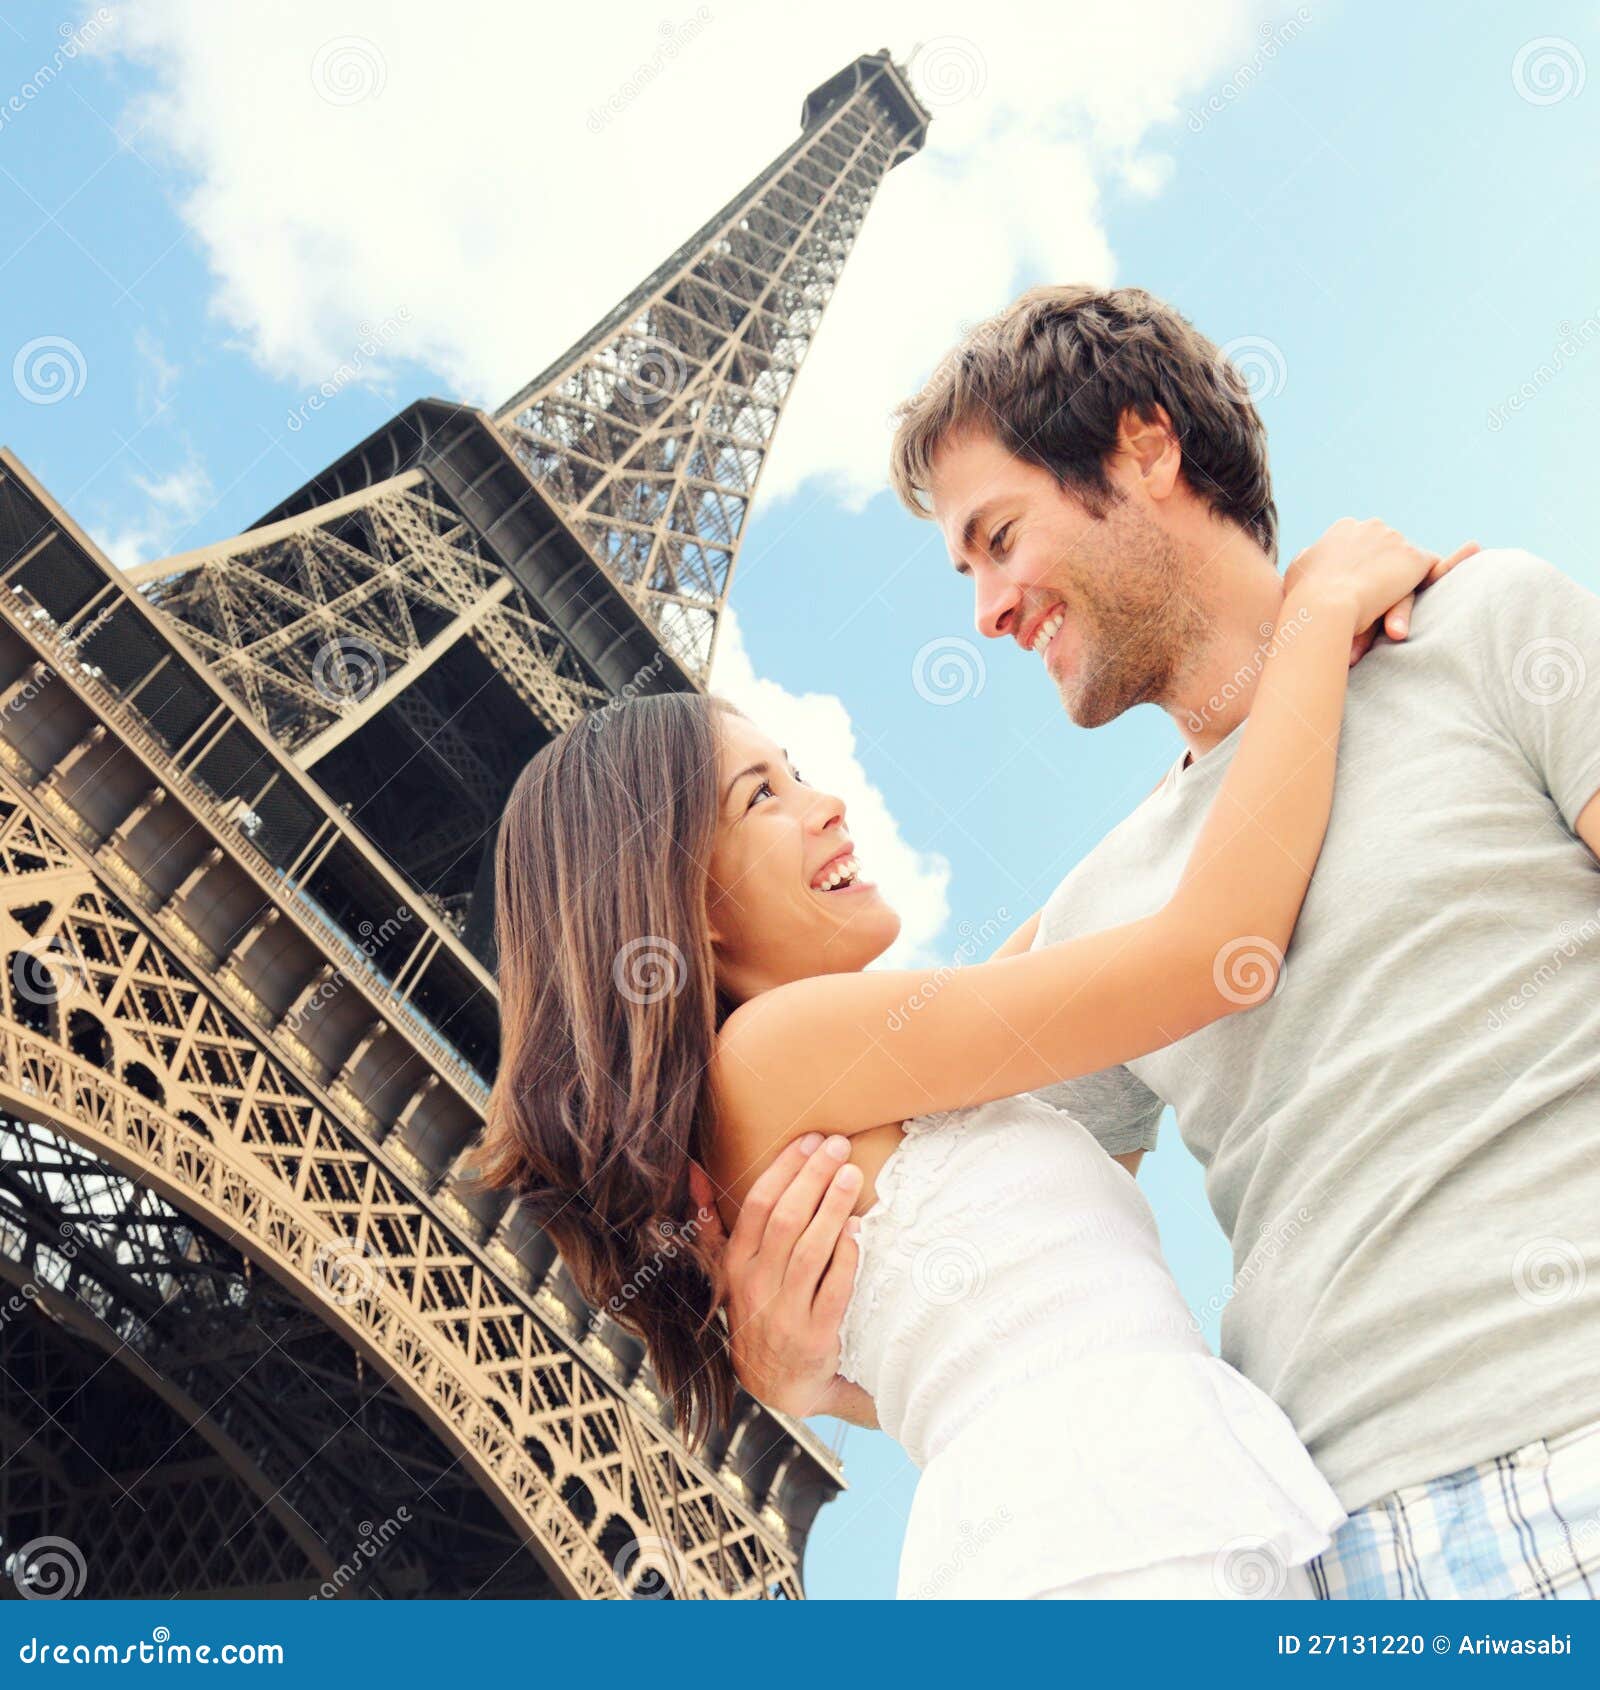 3,085 Paris Eiffel Tower Romantic Couple Stock Photos - Free & Royalty-Free  Stock Photos from Dreamstime